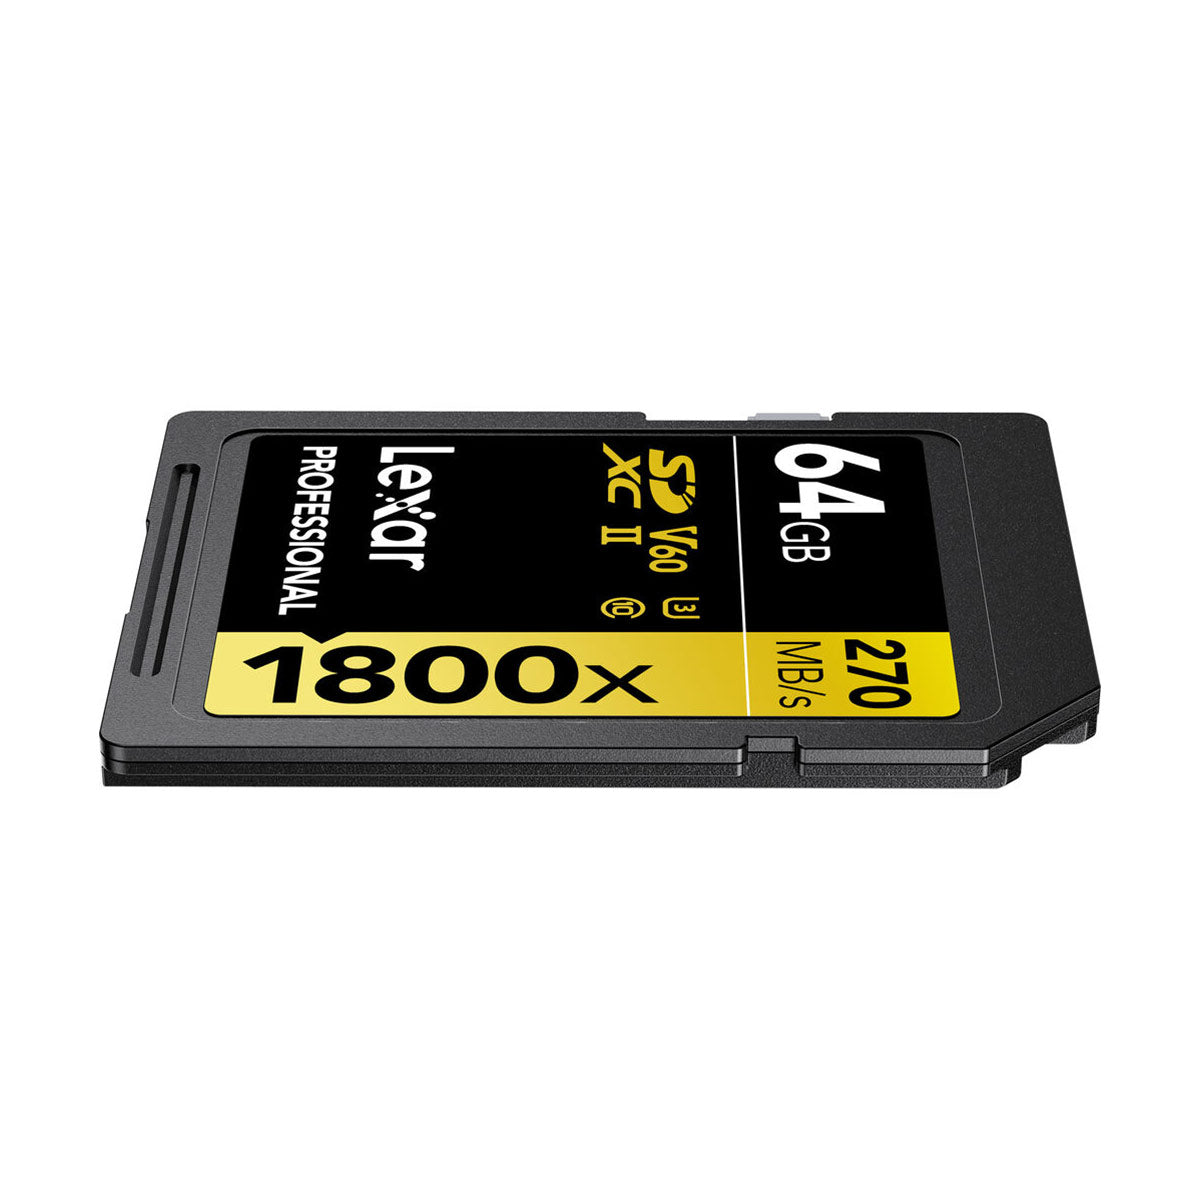 Lexar 64GB Professional 1800x UHS-II V60 SDXC Memory Card (2-Pack)